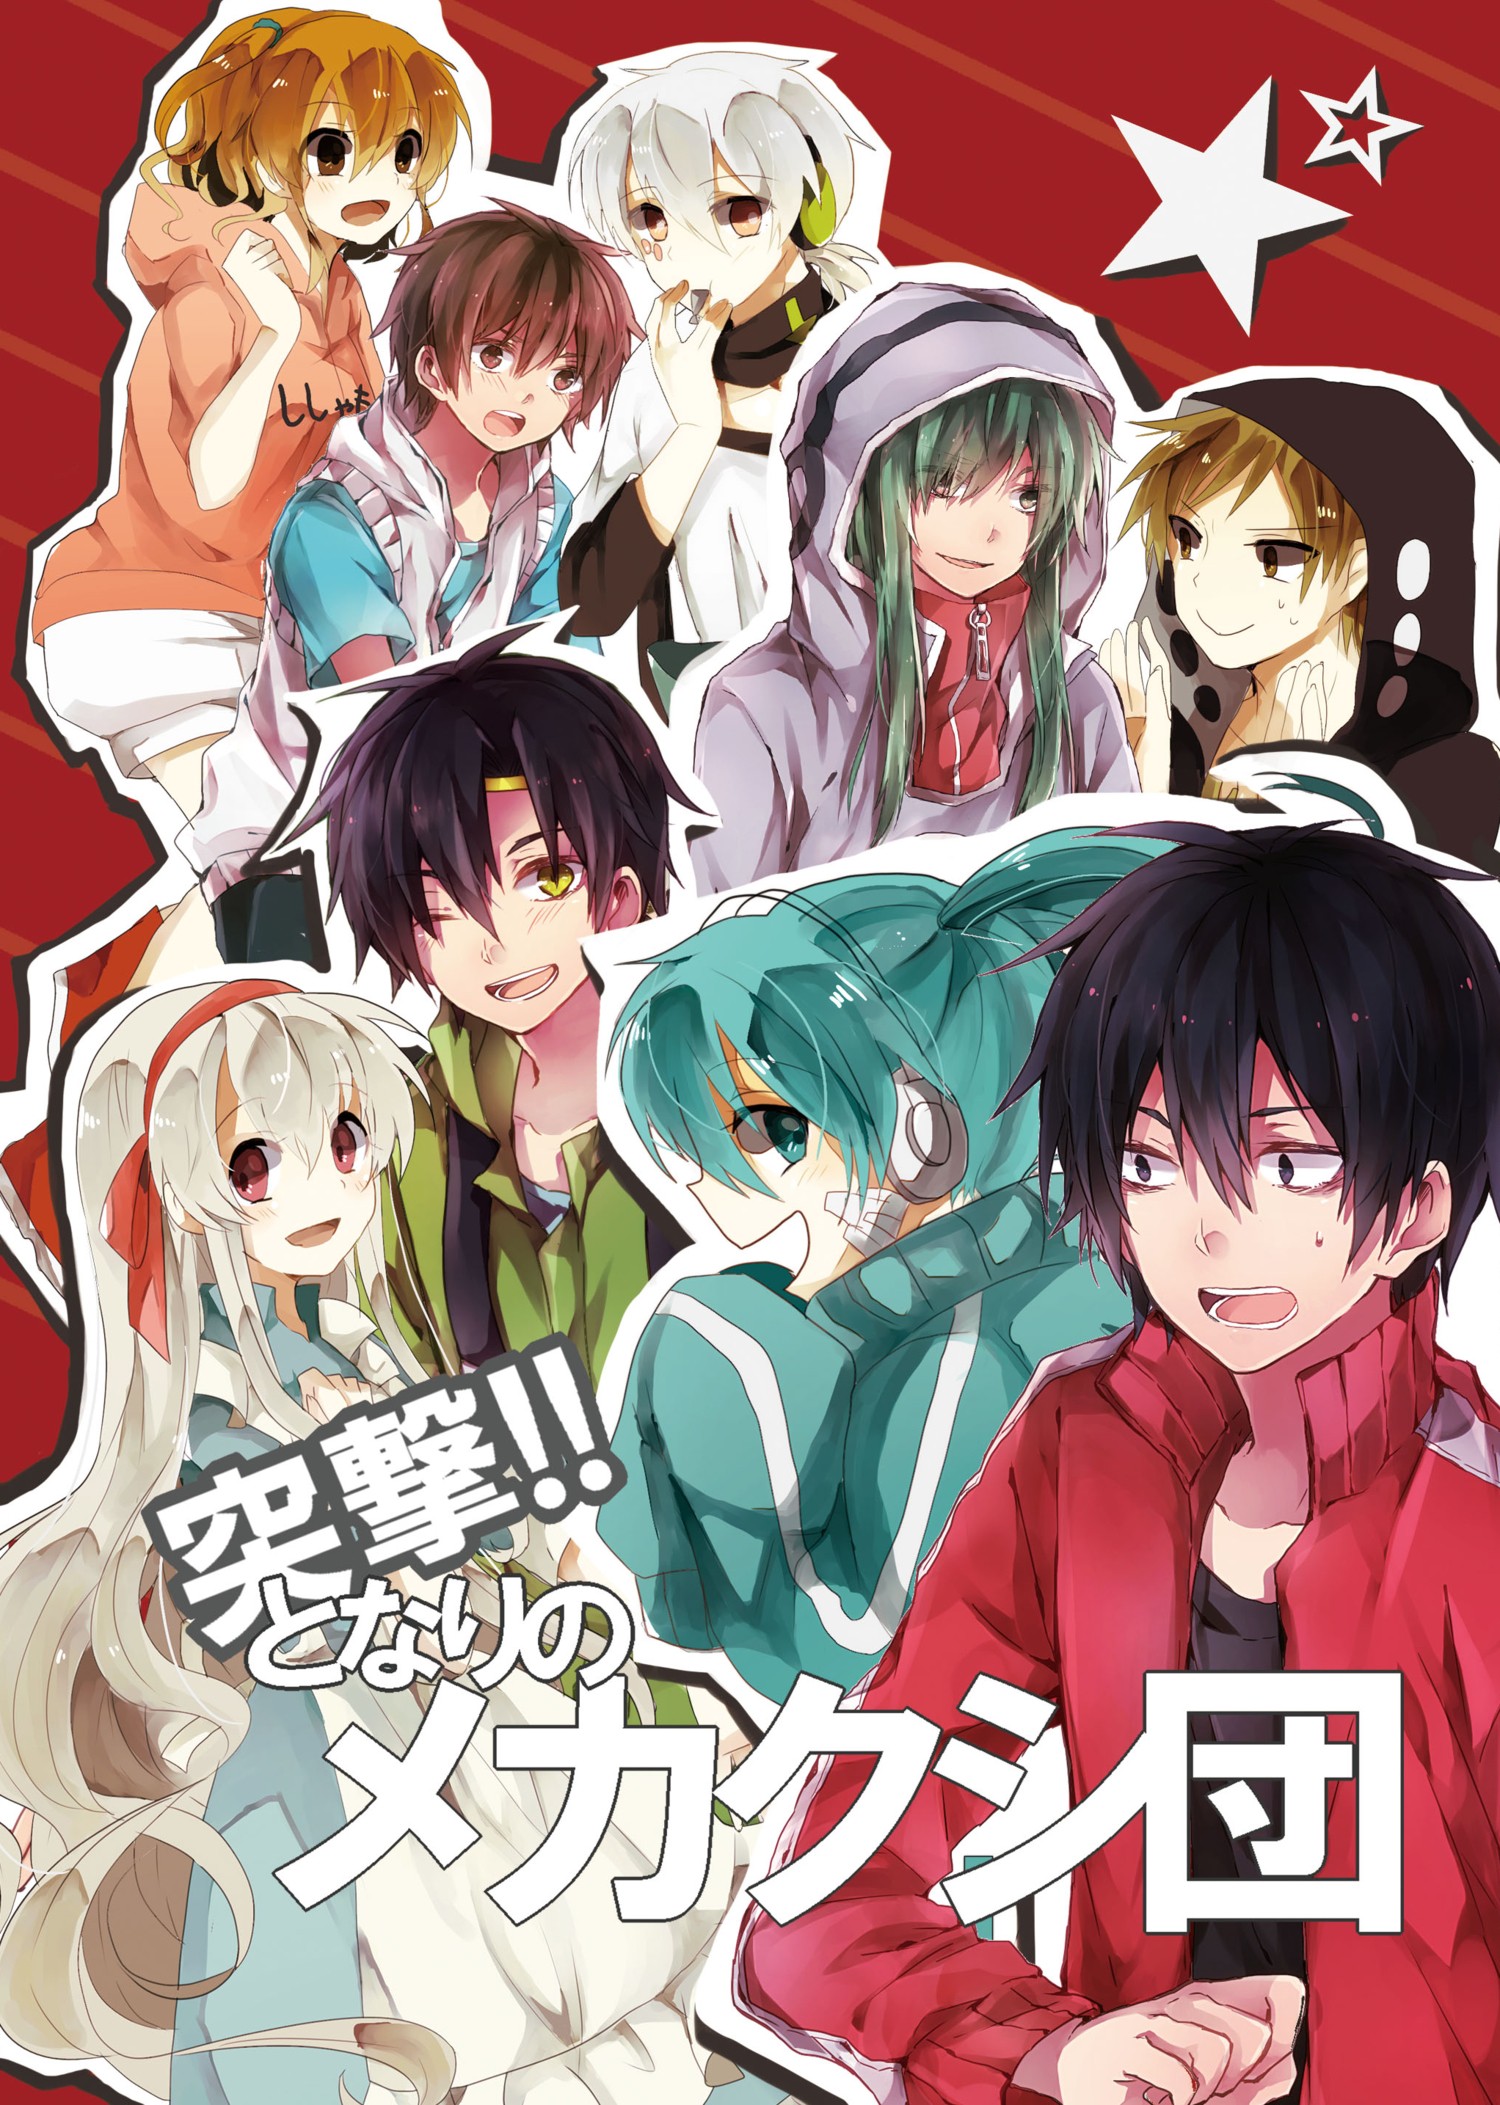 Anime 1500x2105 manga Kagerou Project Konoha (Kagerou Project) Kido Tsubomi anime girls anime boys